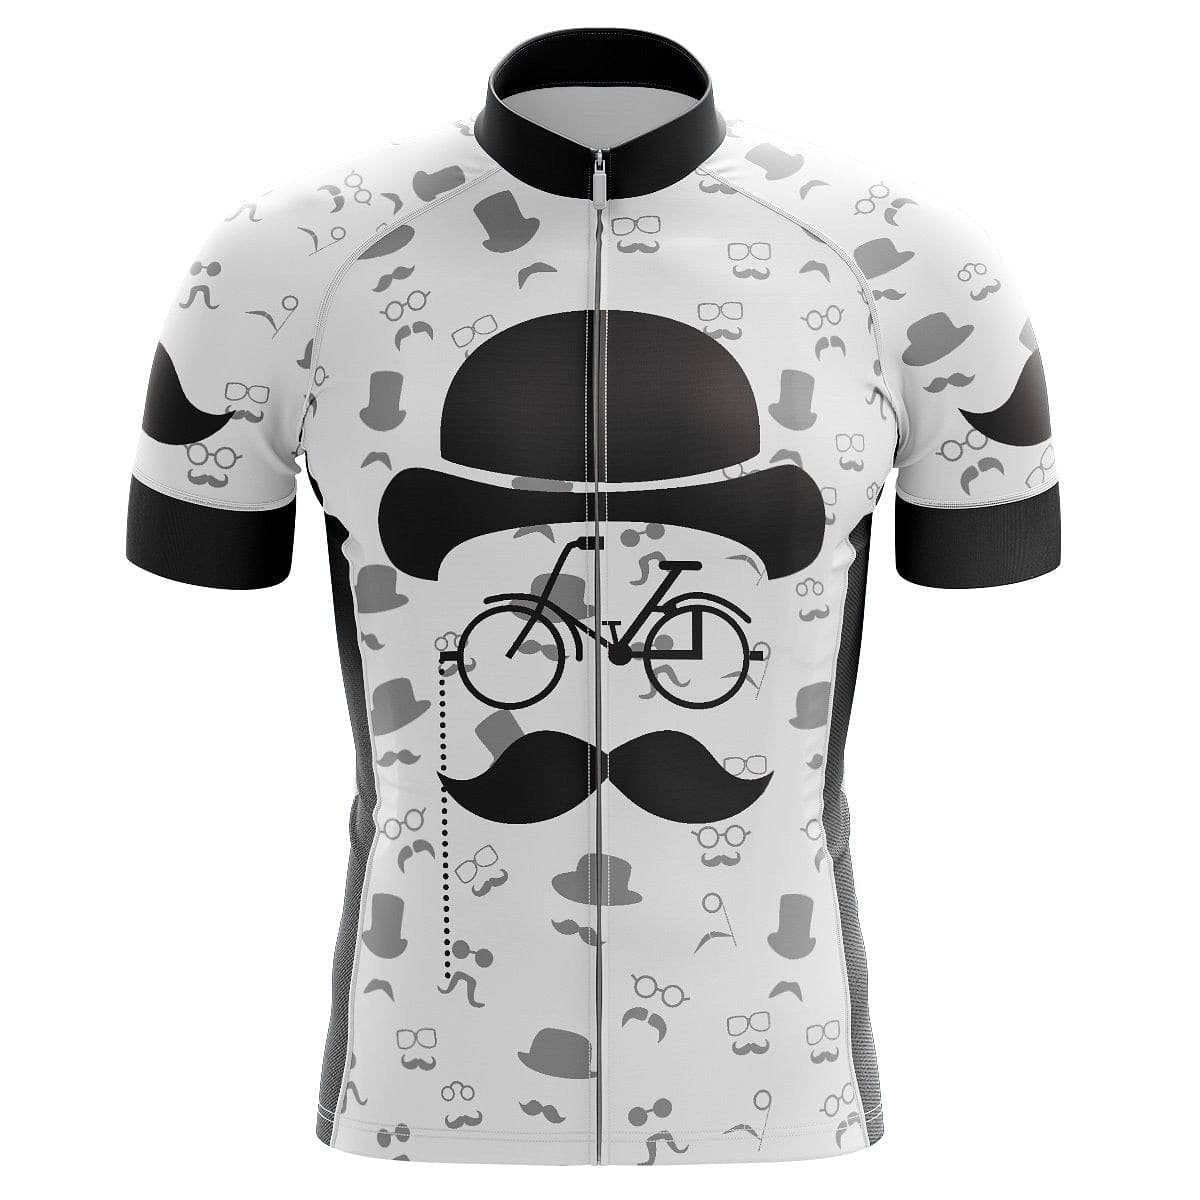 Men's Dapper Moustache Cycling Jersey.